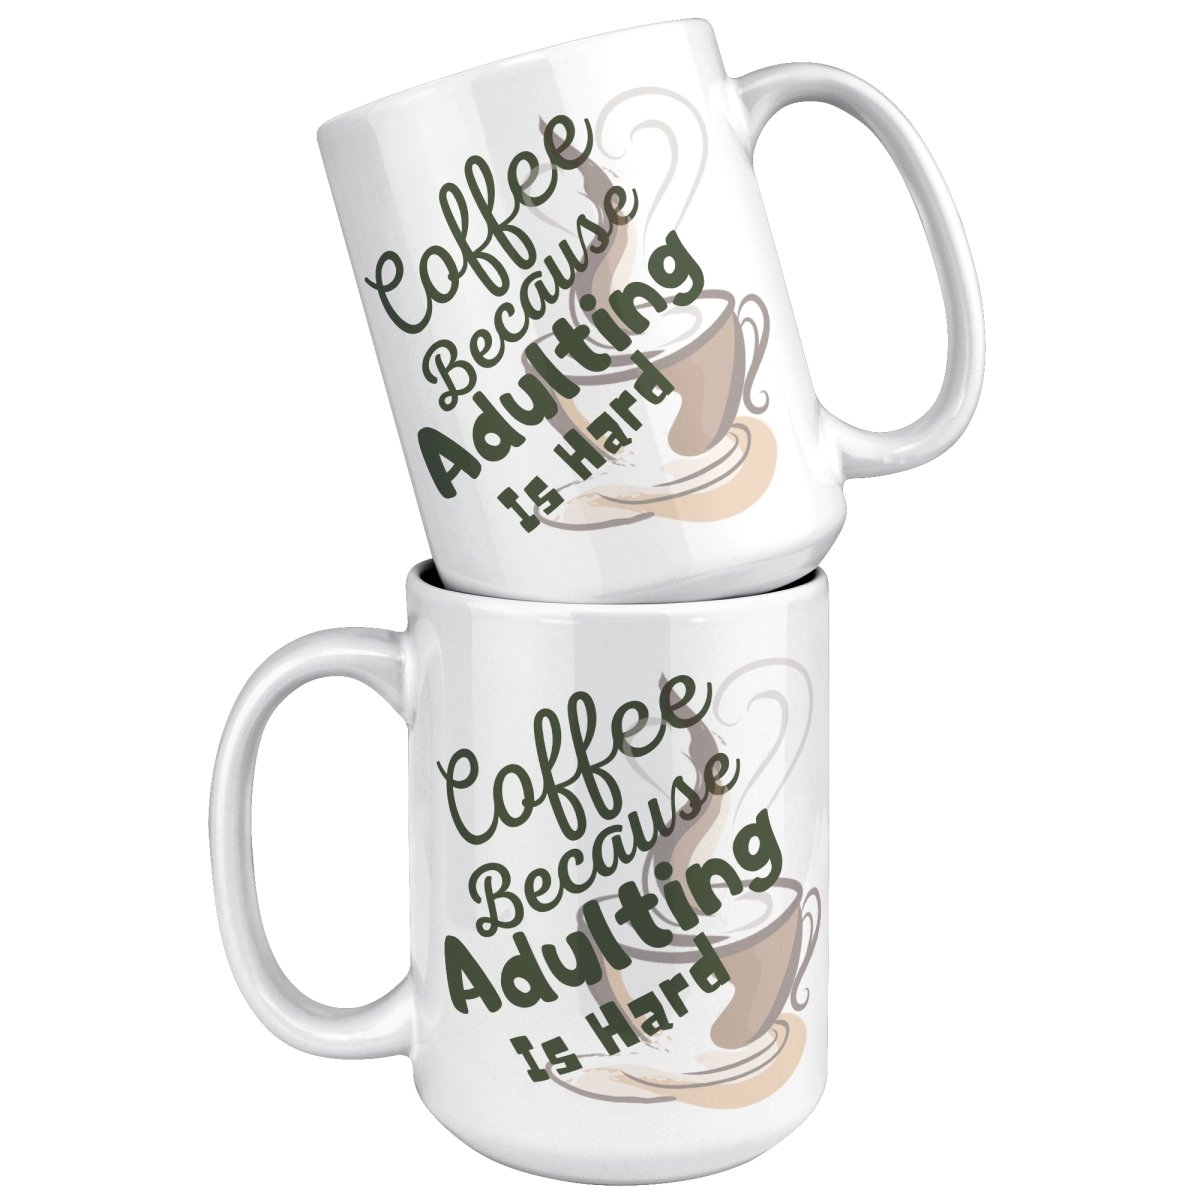 Coffee Because Adulting is Hard Ceramic Mugs, - MemesRetail.com